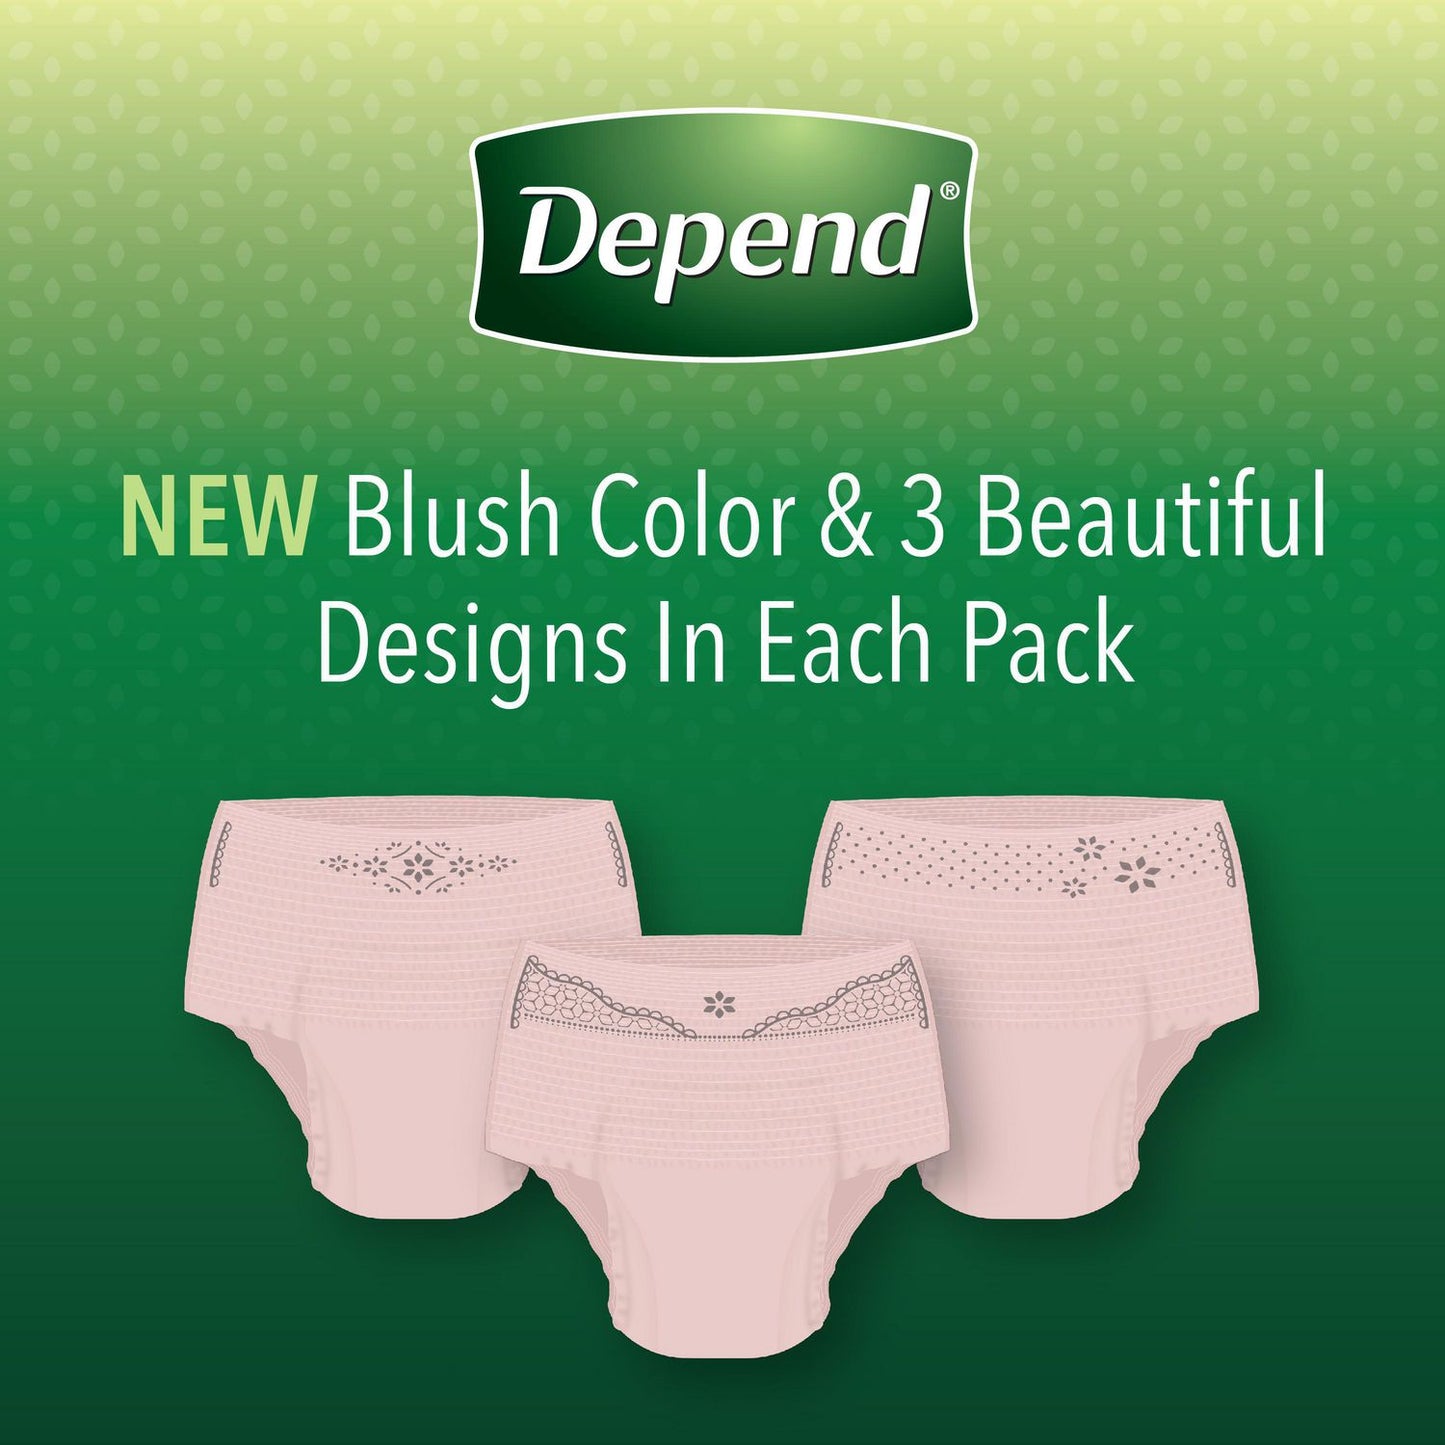 Depend®- FIT-FLEX Incontinence Underwear For Women, Disposable